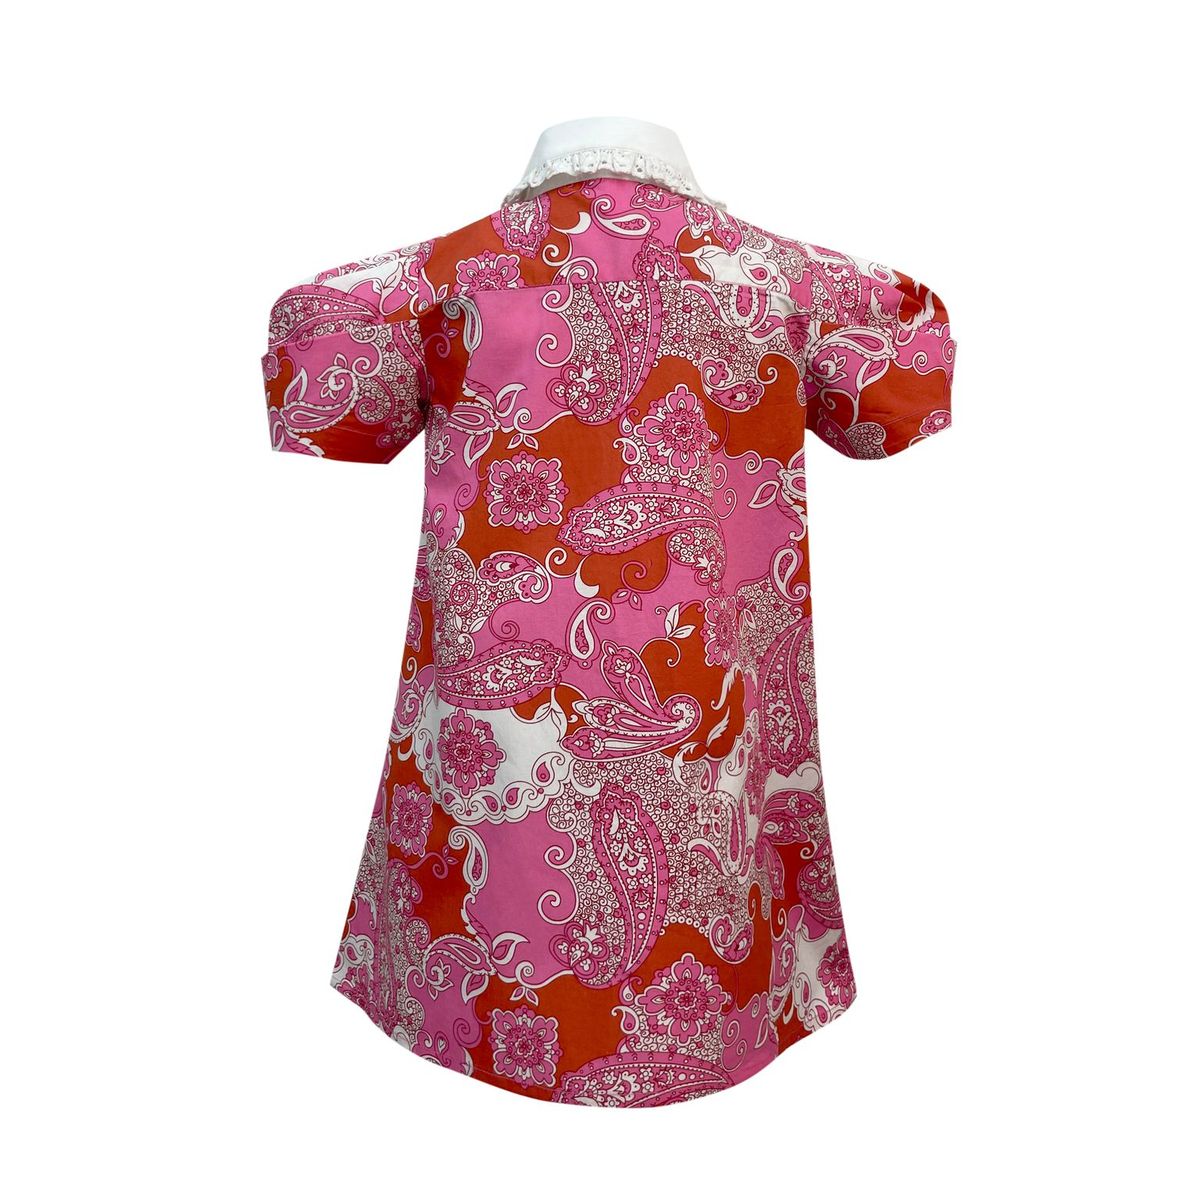 The Alaia Paisley Shirt Dress